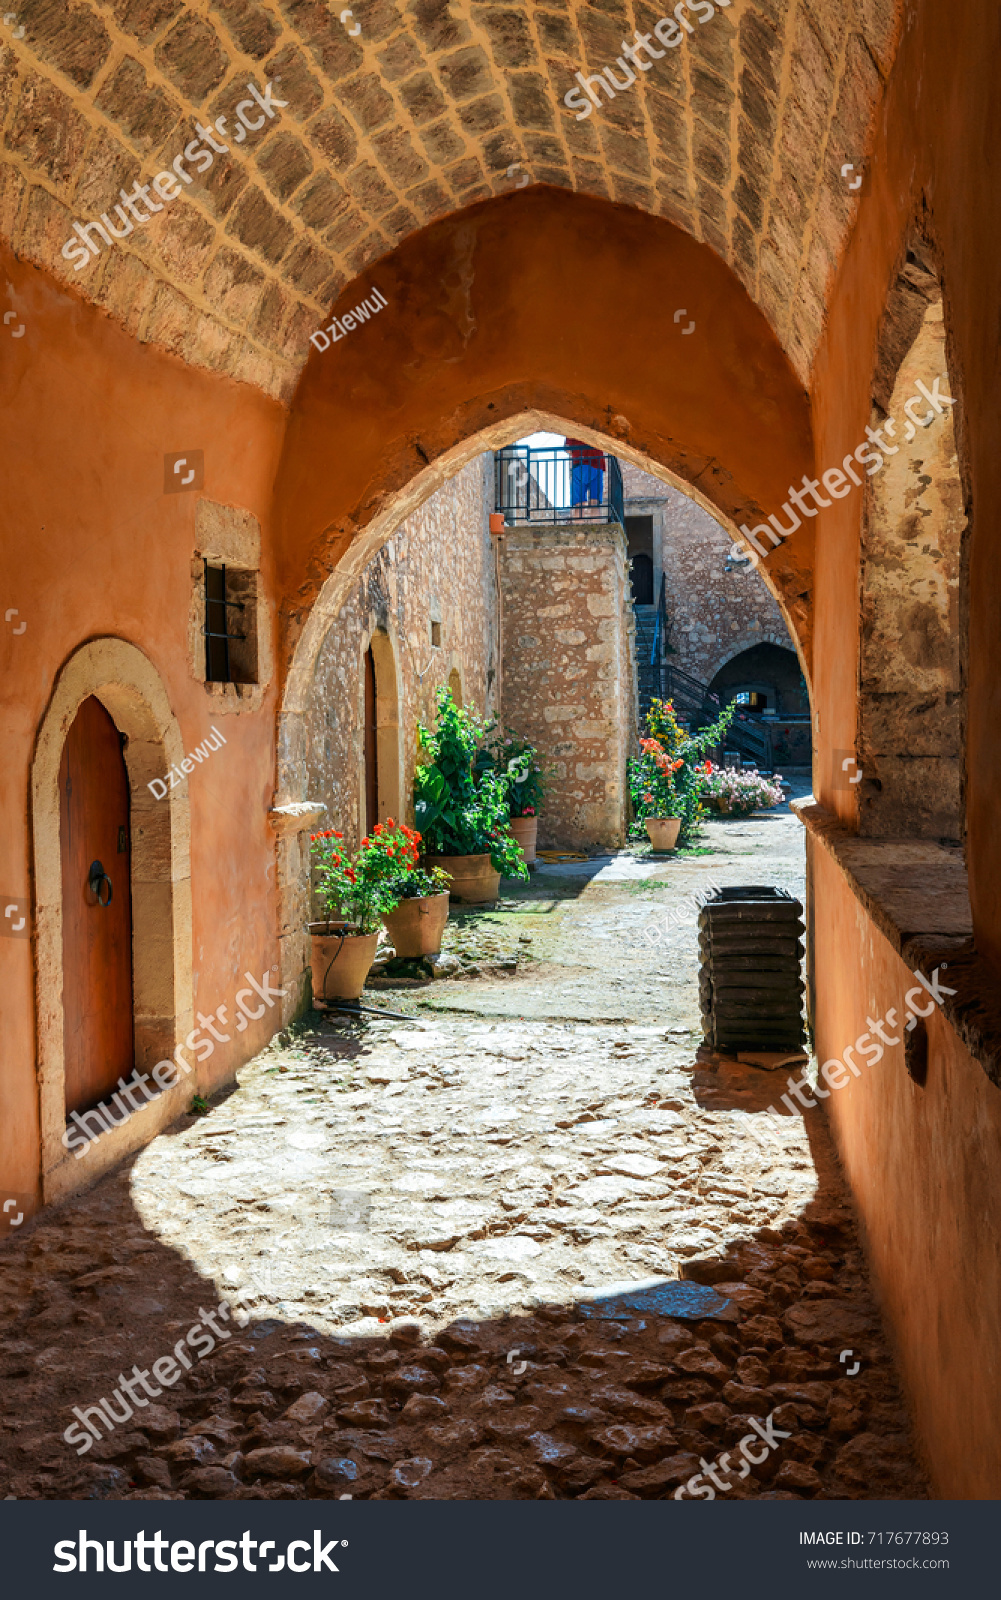  Passageway in the West Gate at the Arkadi Monastery, Arkadi, Crete, Greece #717677893